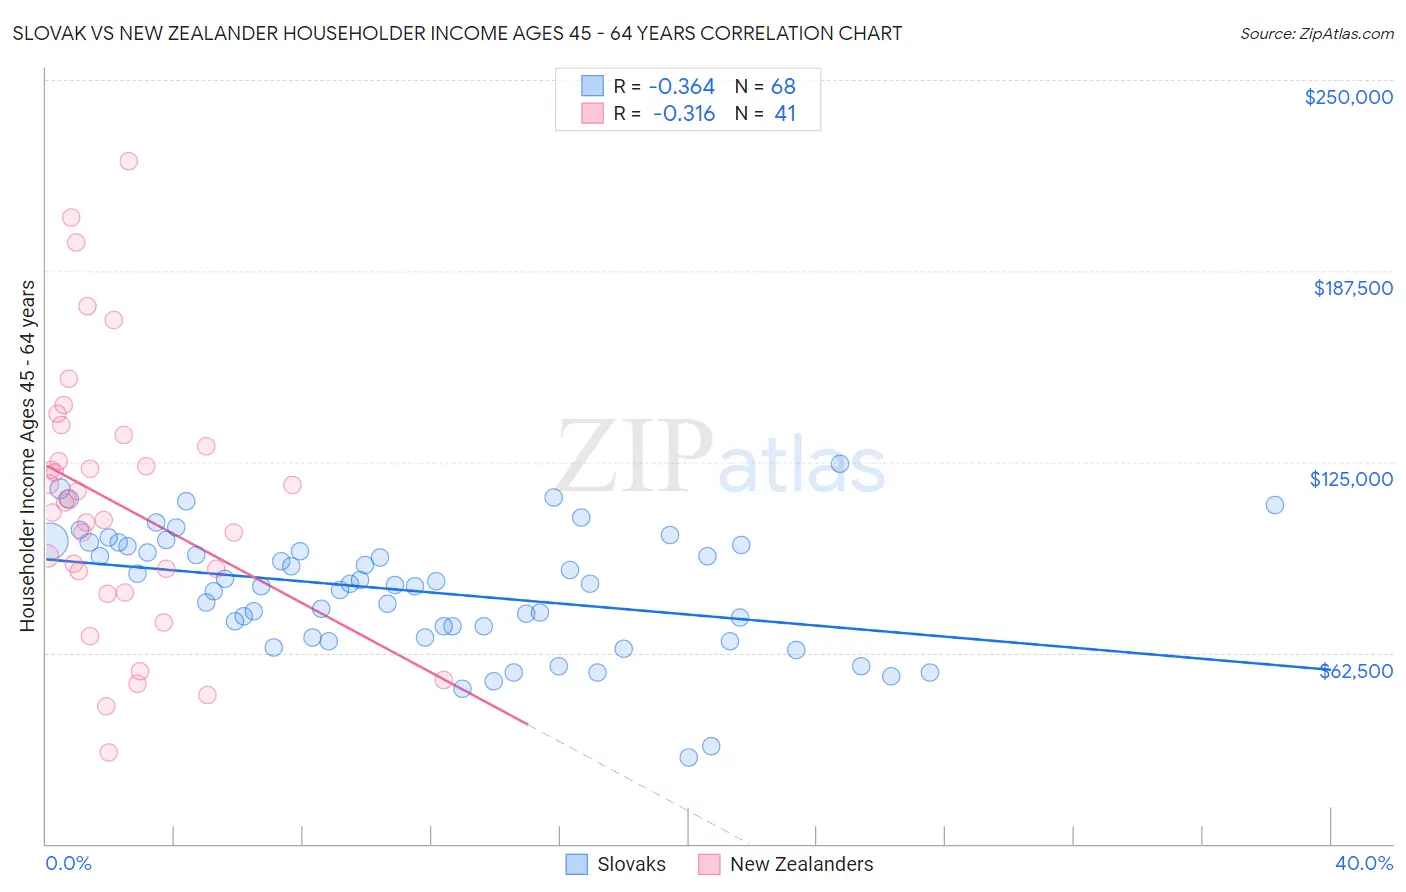 Slovak vs New Zealander Householder Income Ages 45 - 64 years